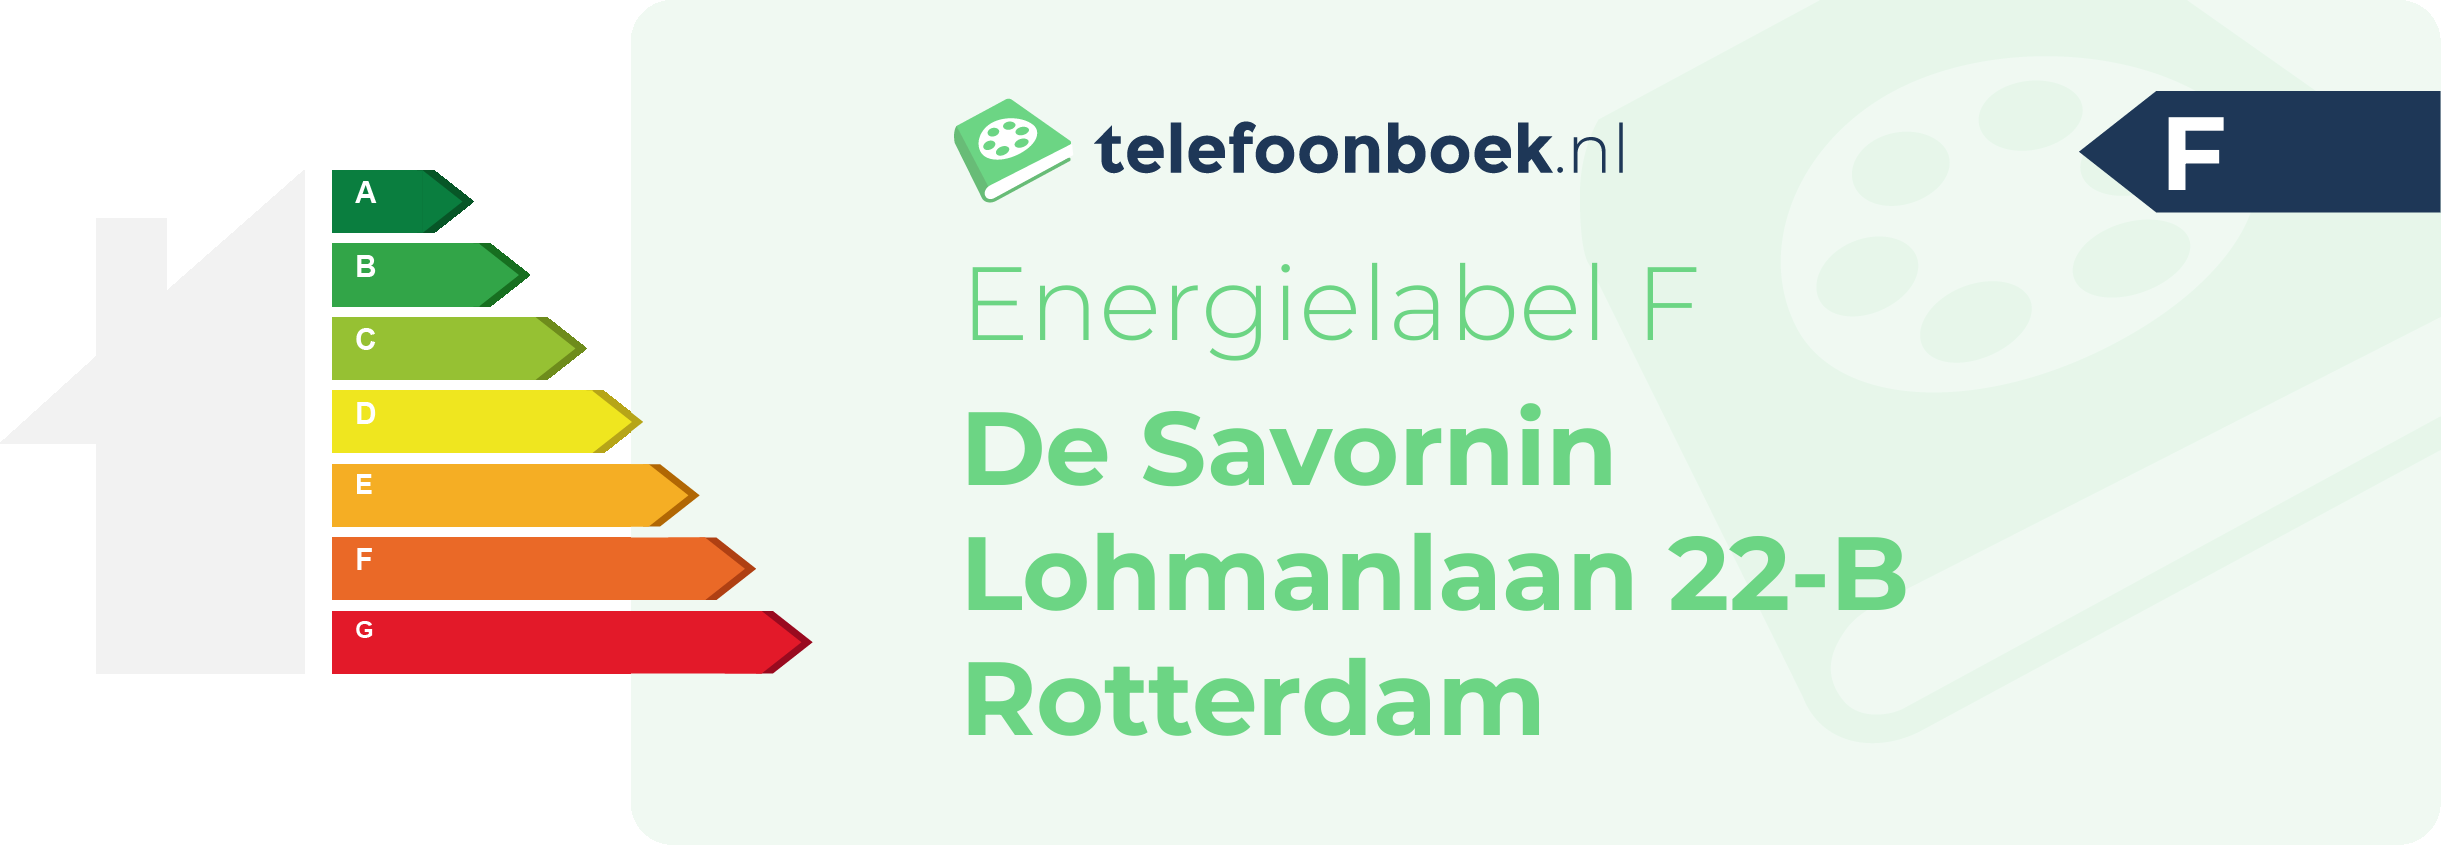 Energielabel De Savornin Lohmanlaan 22-B Rotterdam